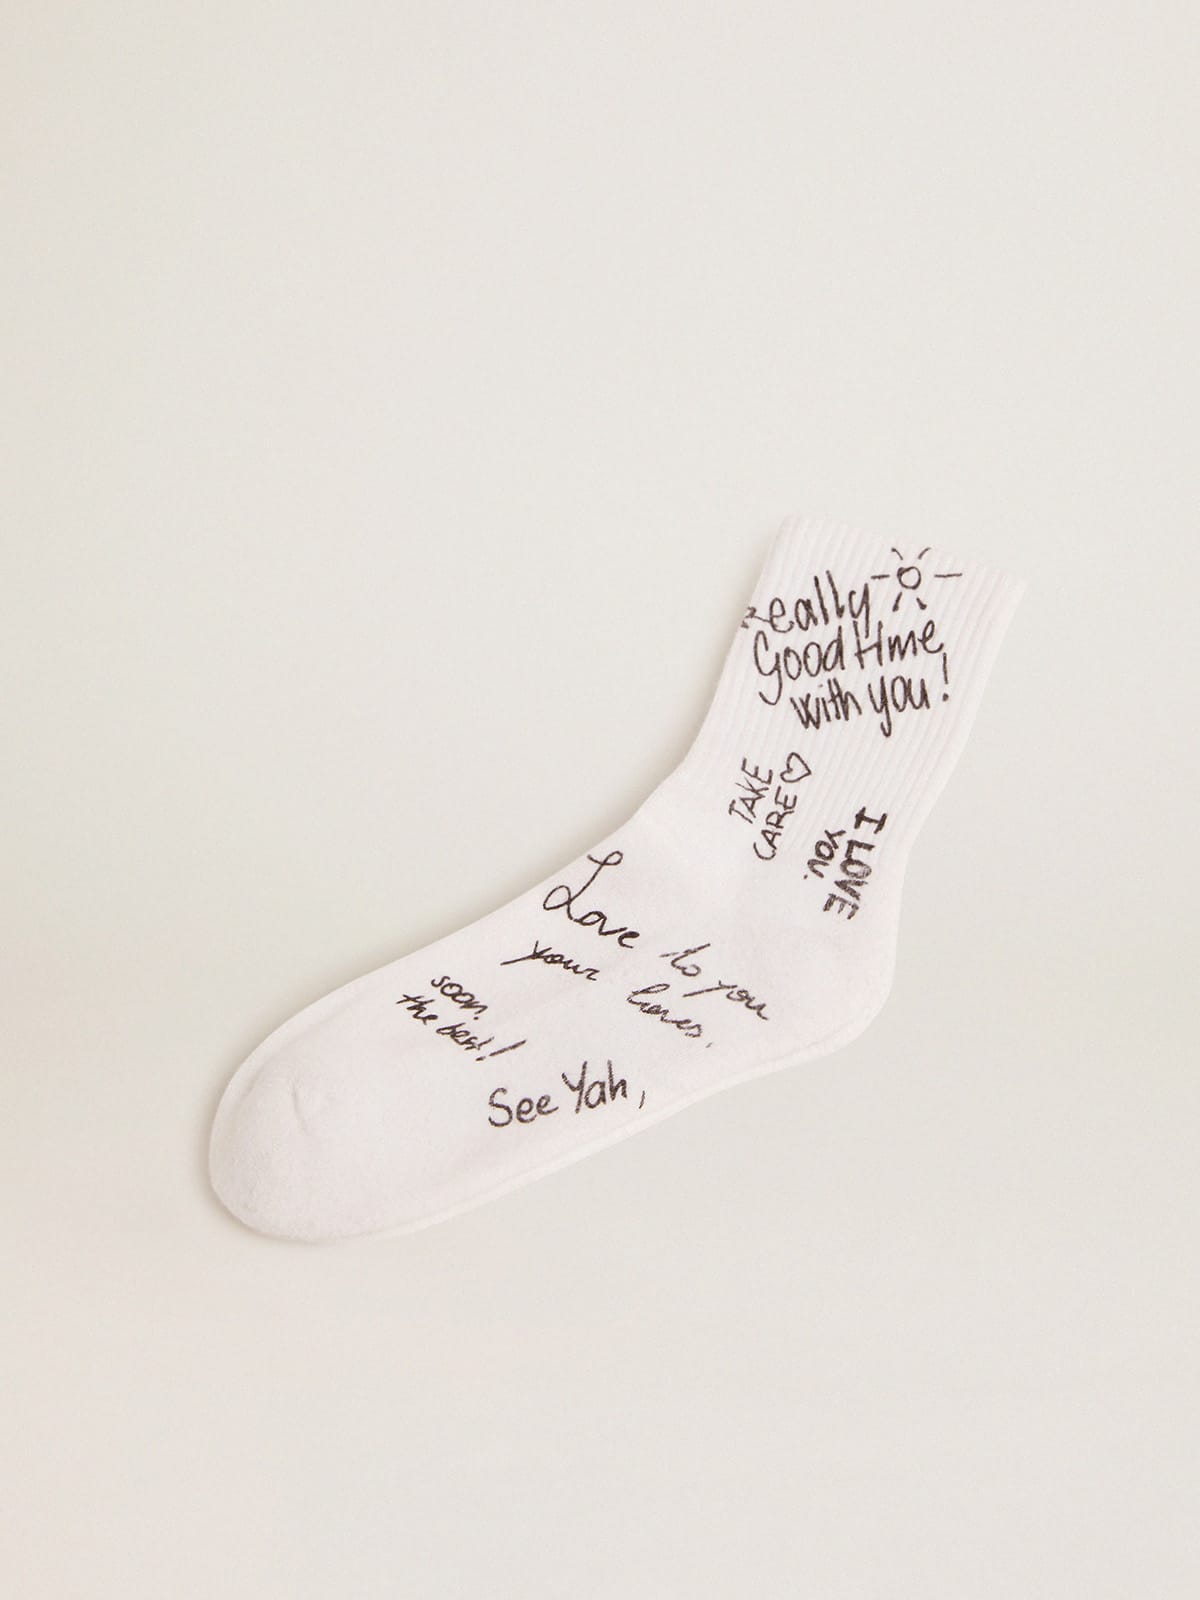 Golden Goose - Optical white socks with black lettering in 